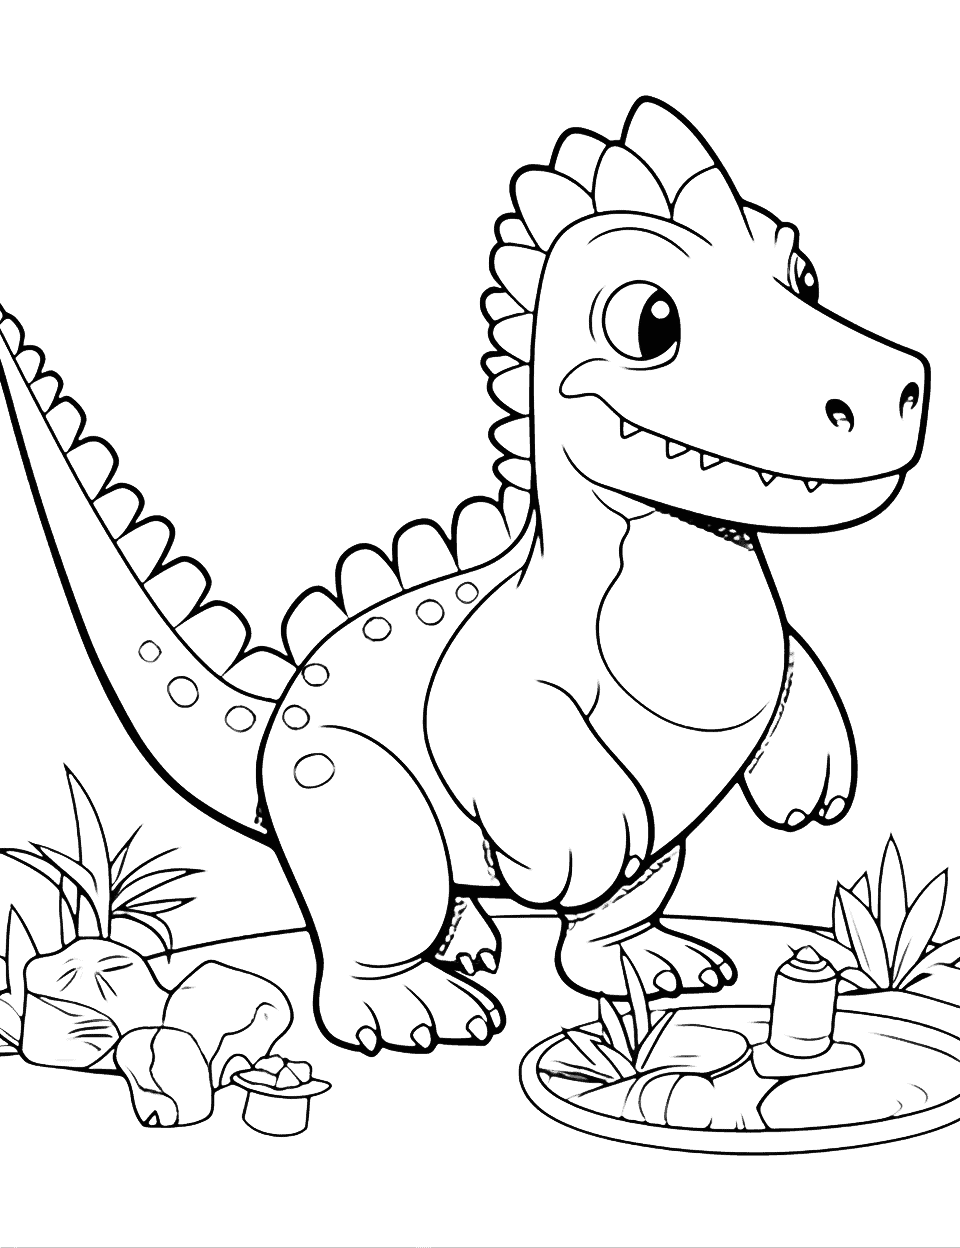 Preschool Dino Pal Coloring Page - Cartoonish, preschool-friendly dinosaur having a meal.